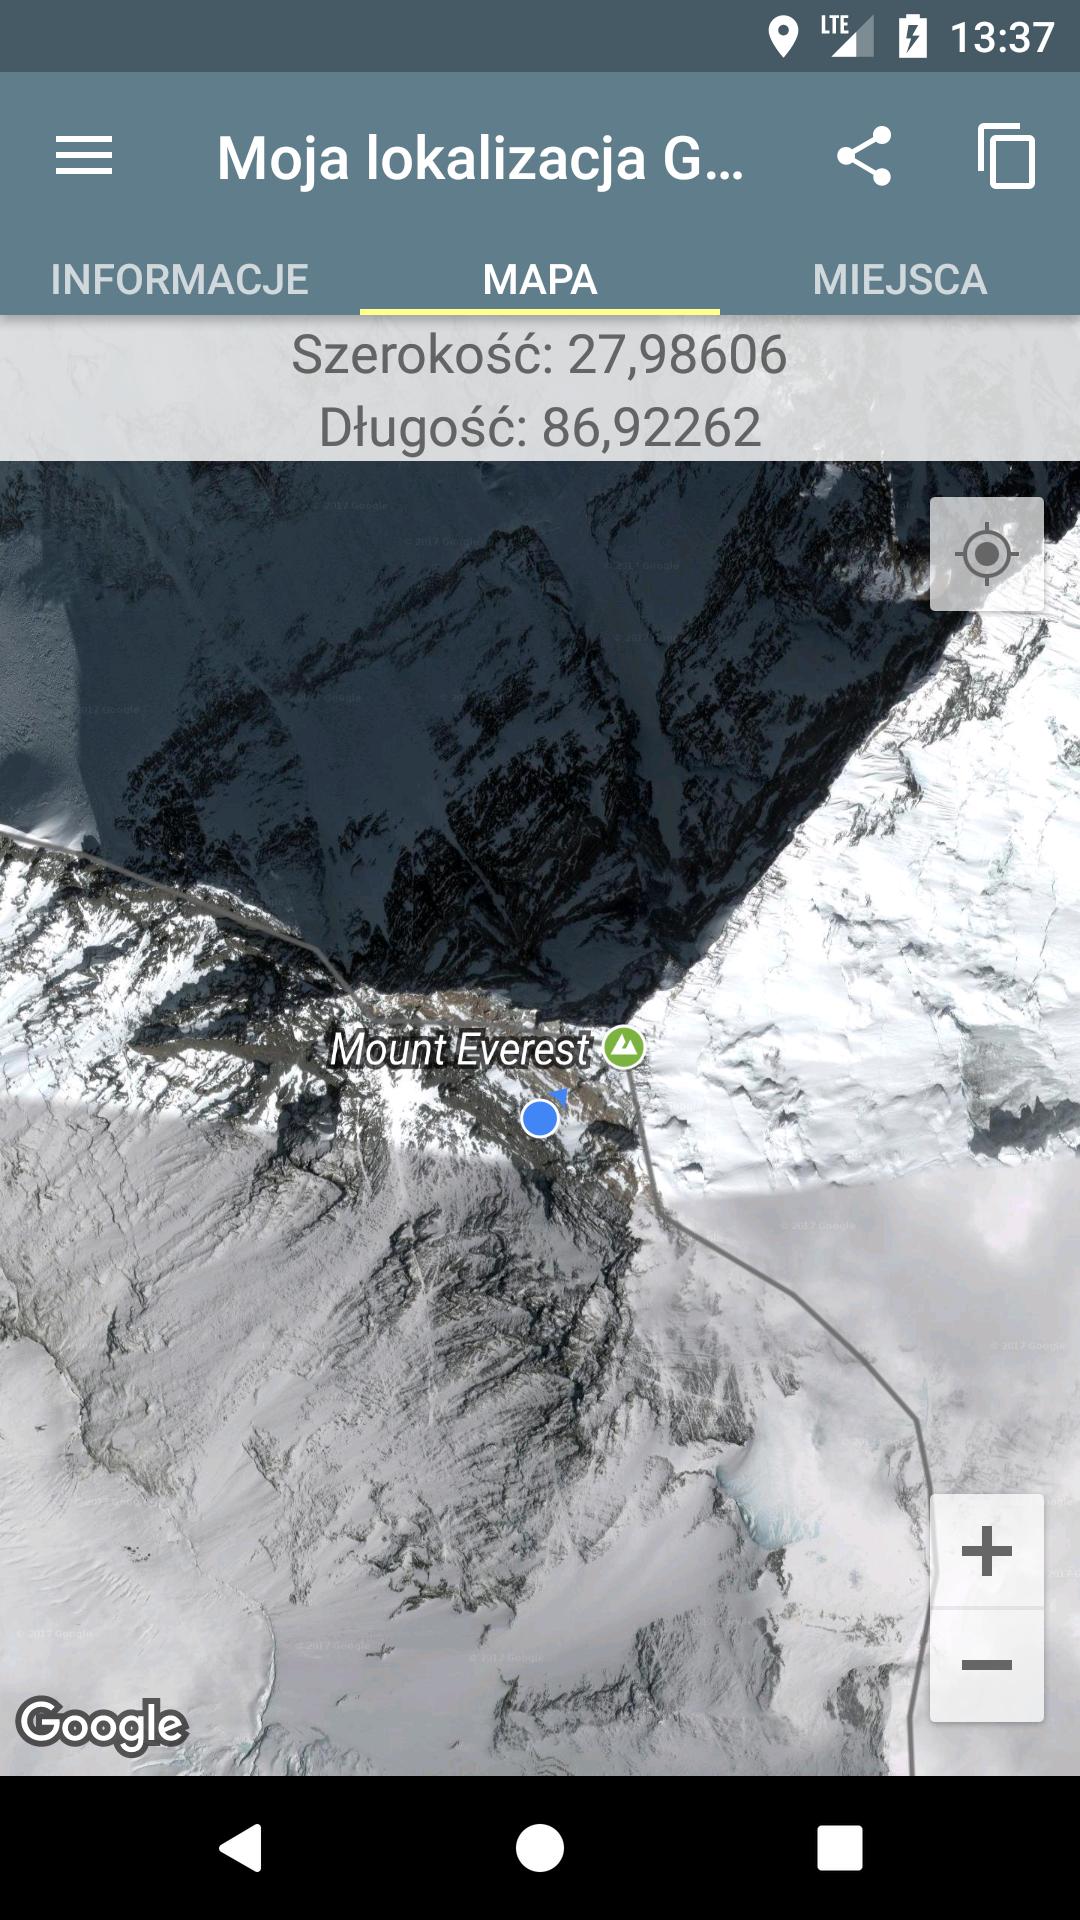 Moja lokalizacja GPS for Android - APK Download